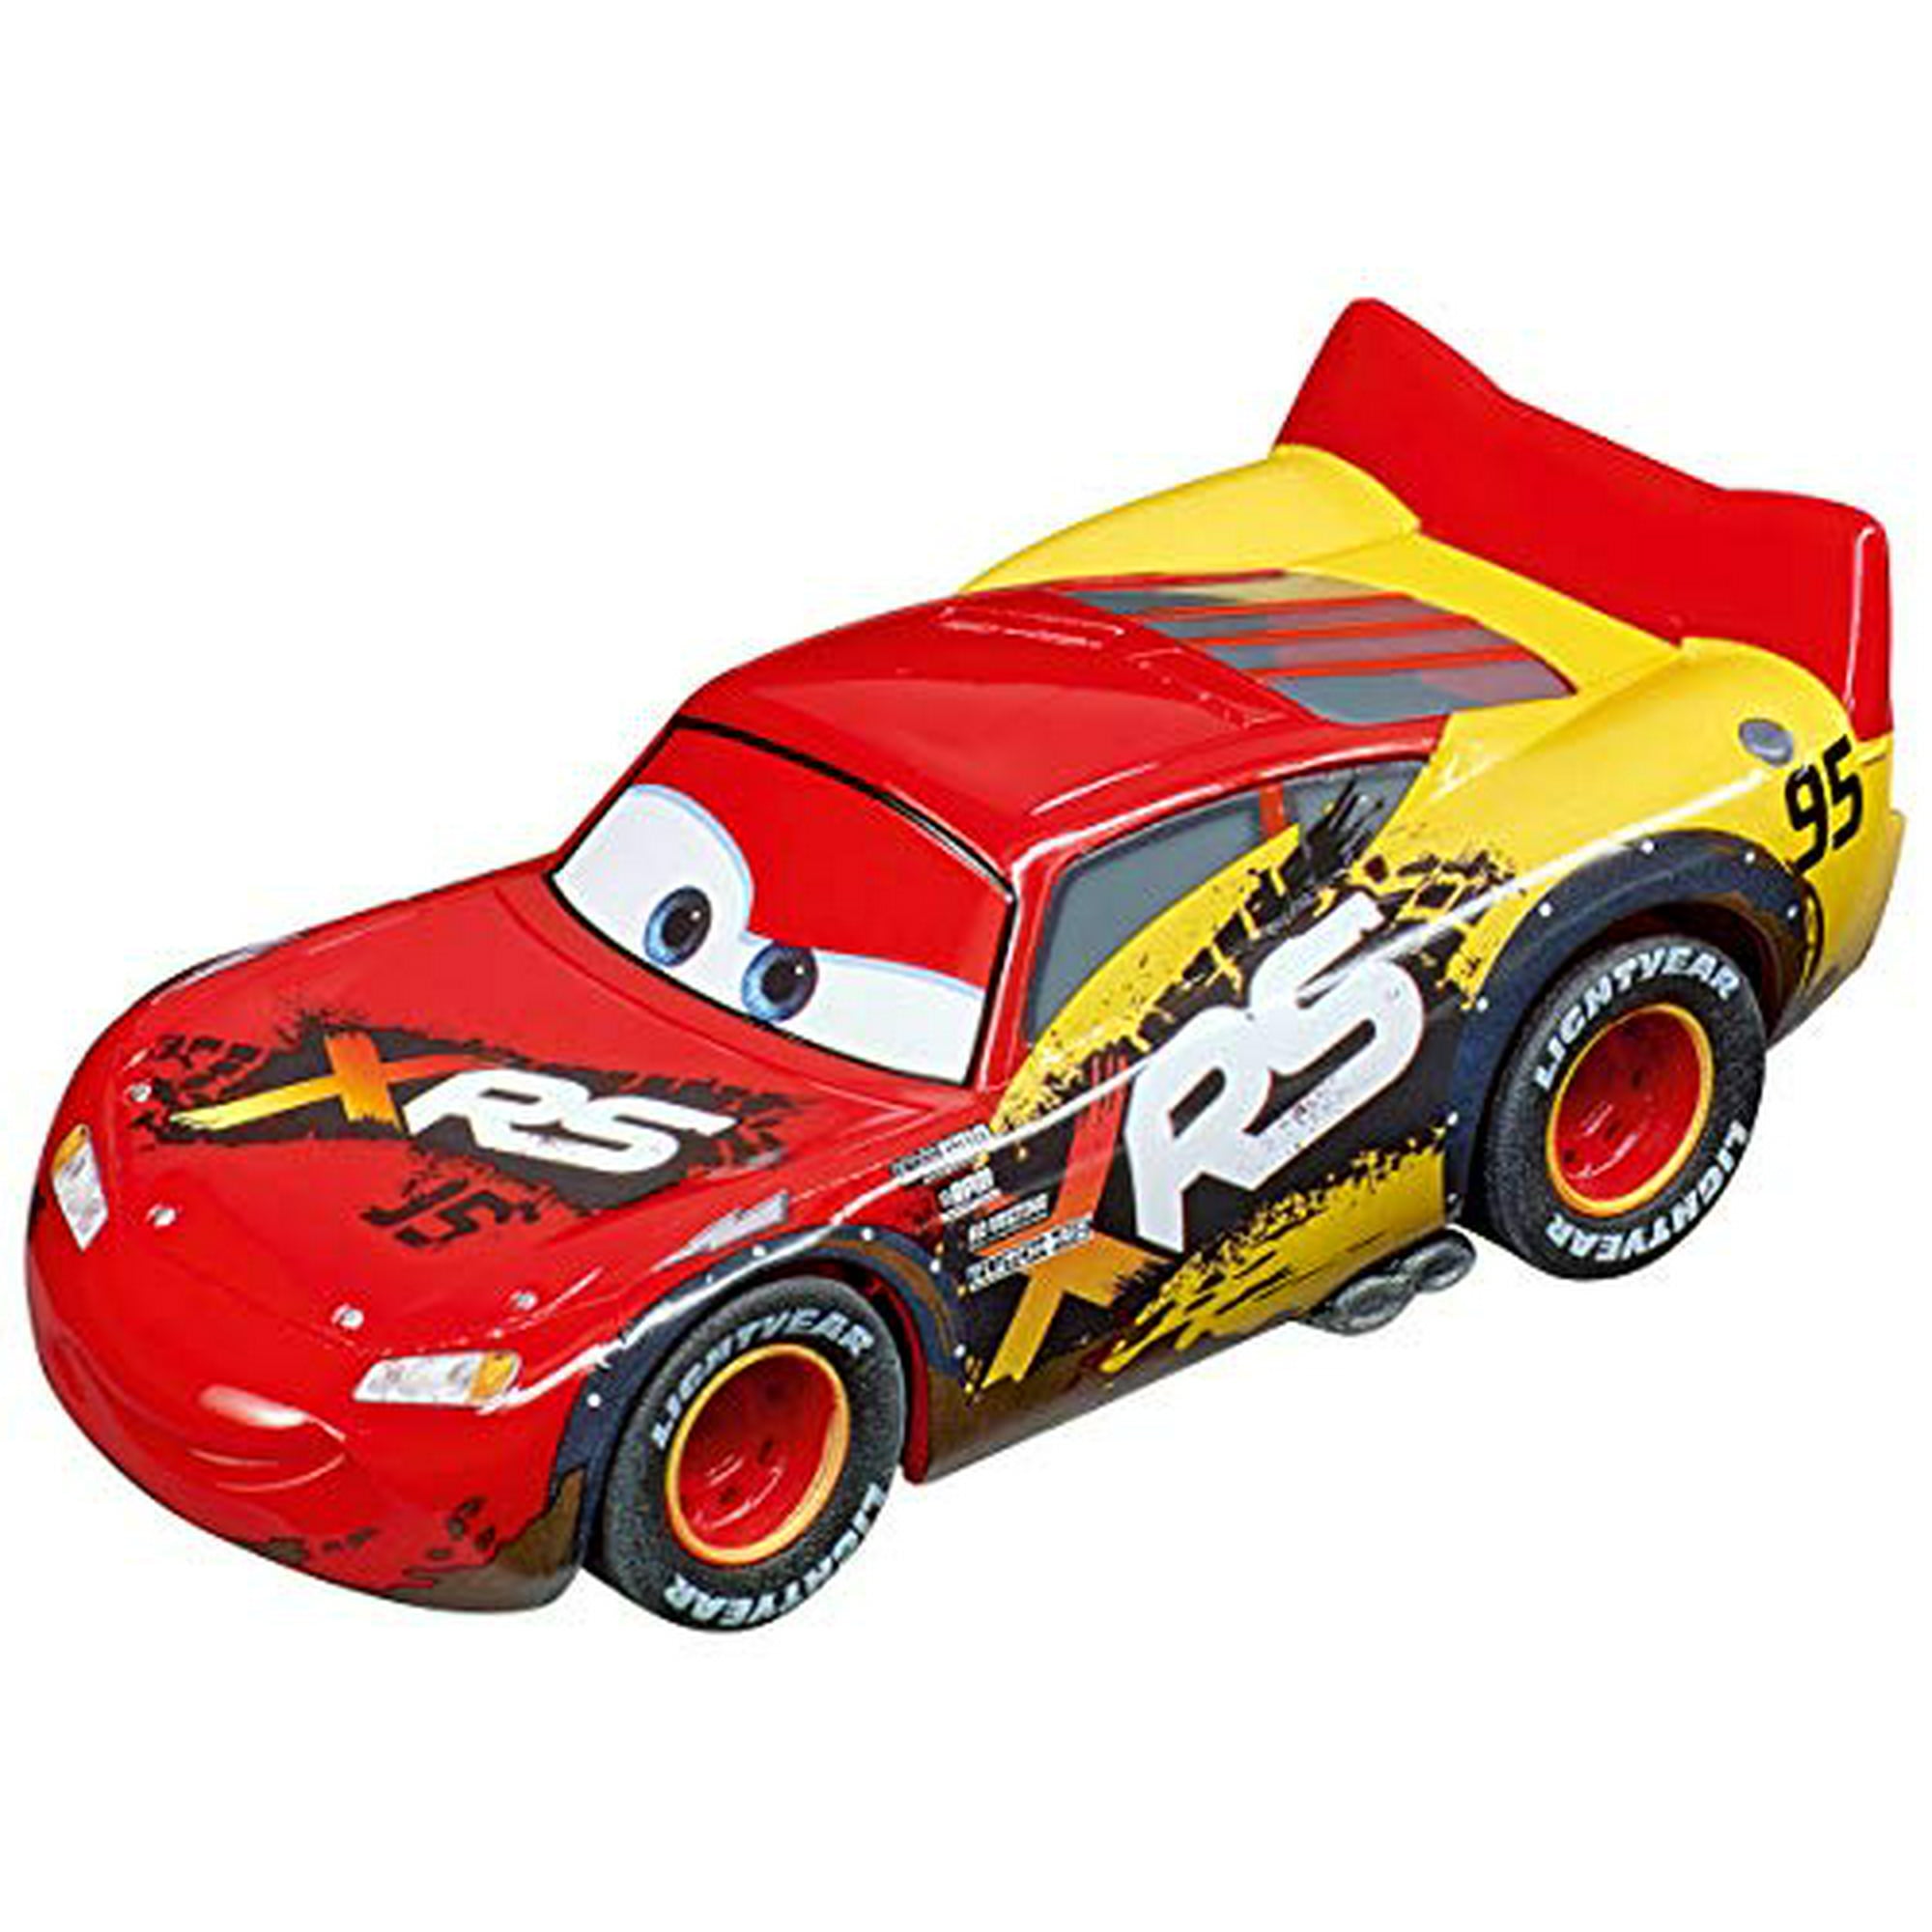 Carrera 64153 Disney Pixar Cars Lightning McQueen Mud Racers GO!!! Slot Car  Racing Vehicle 1:43 Scale | Walmart Canada